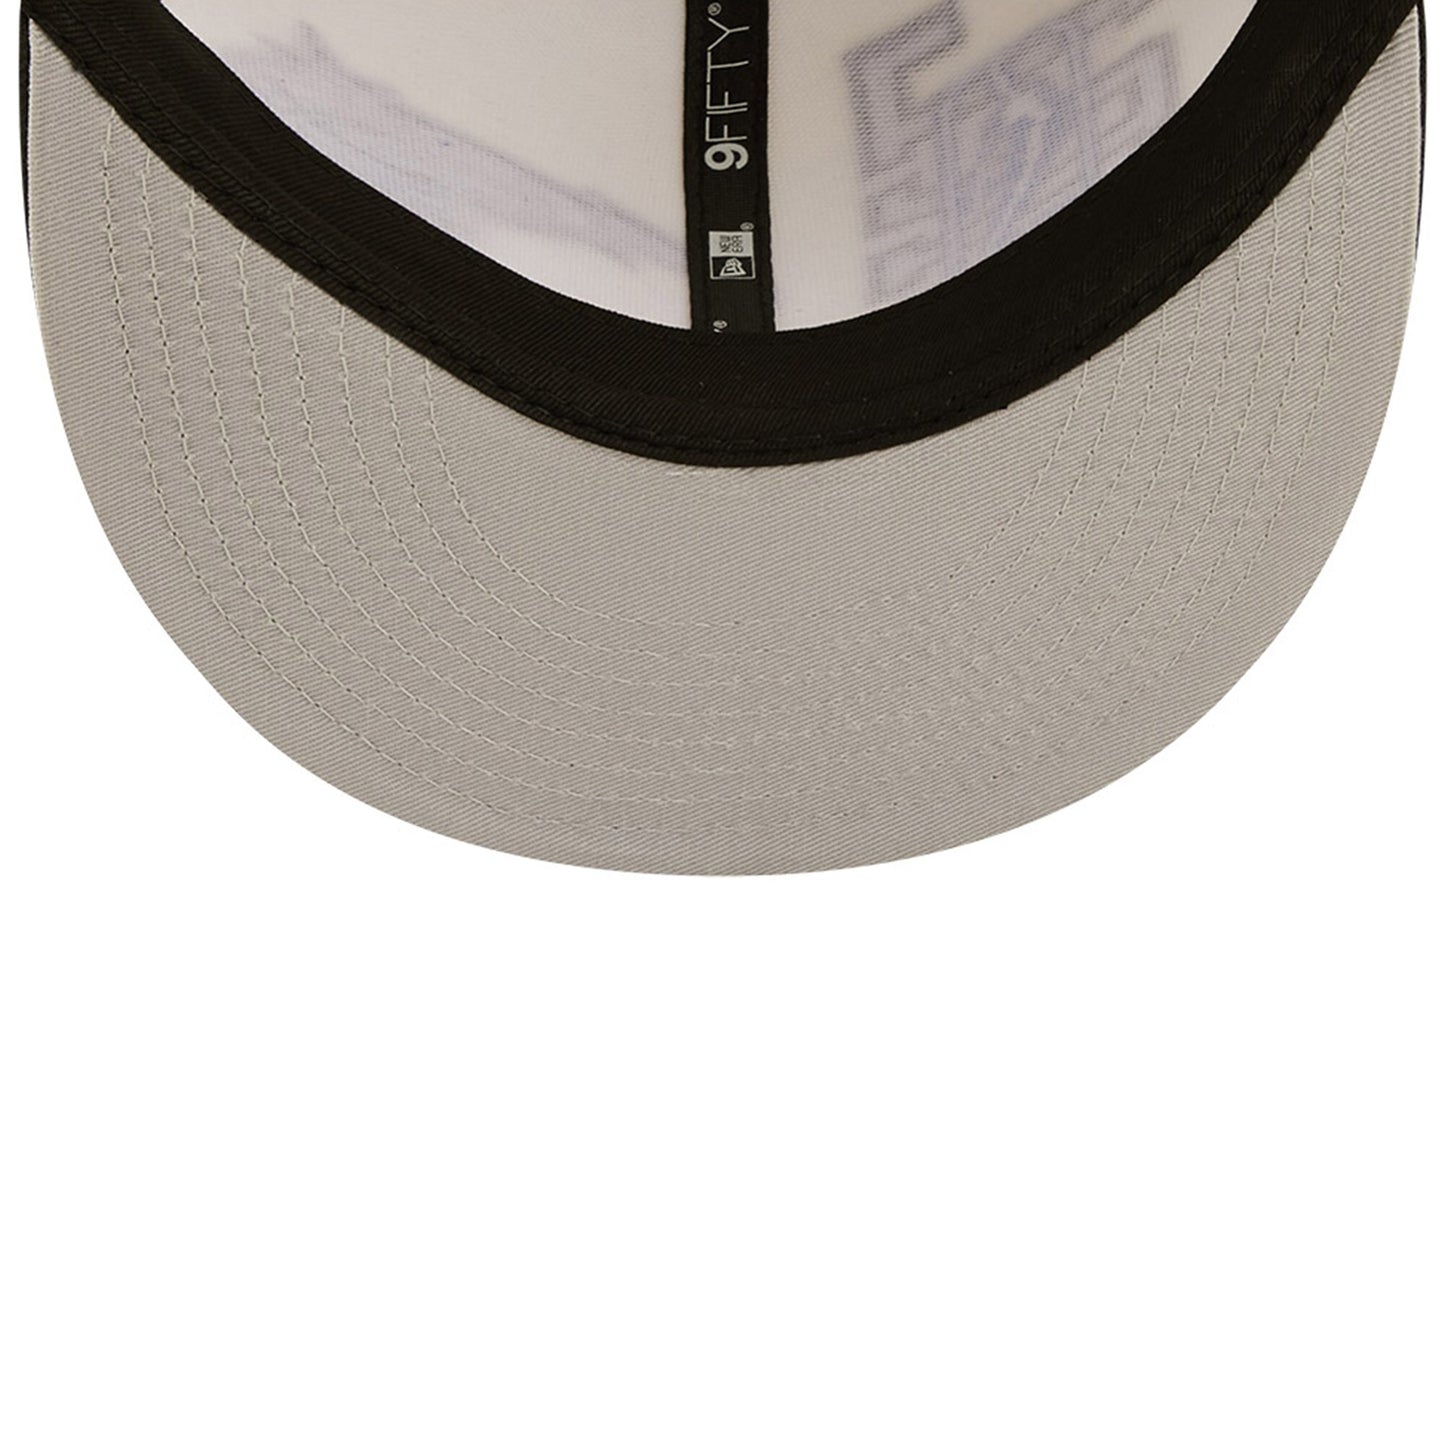 Orlando Magic New Era 2022 NBA Draft 9FIFTY Snapback Adjustable Hat - Cream/Black